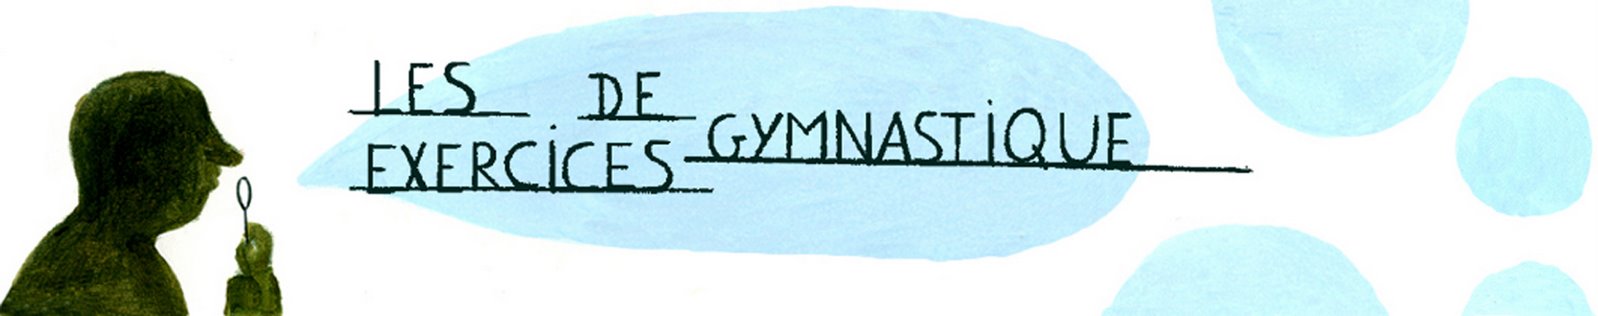 les exercices de gymnastique